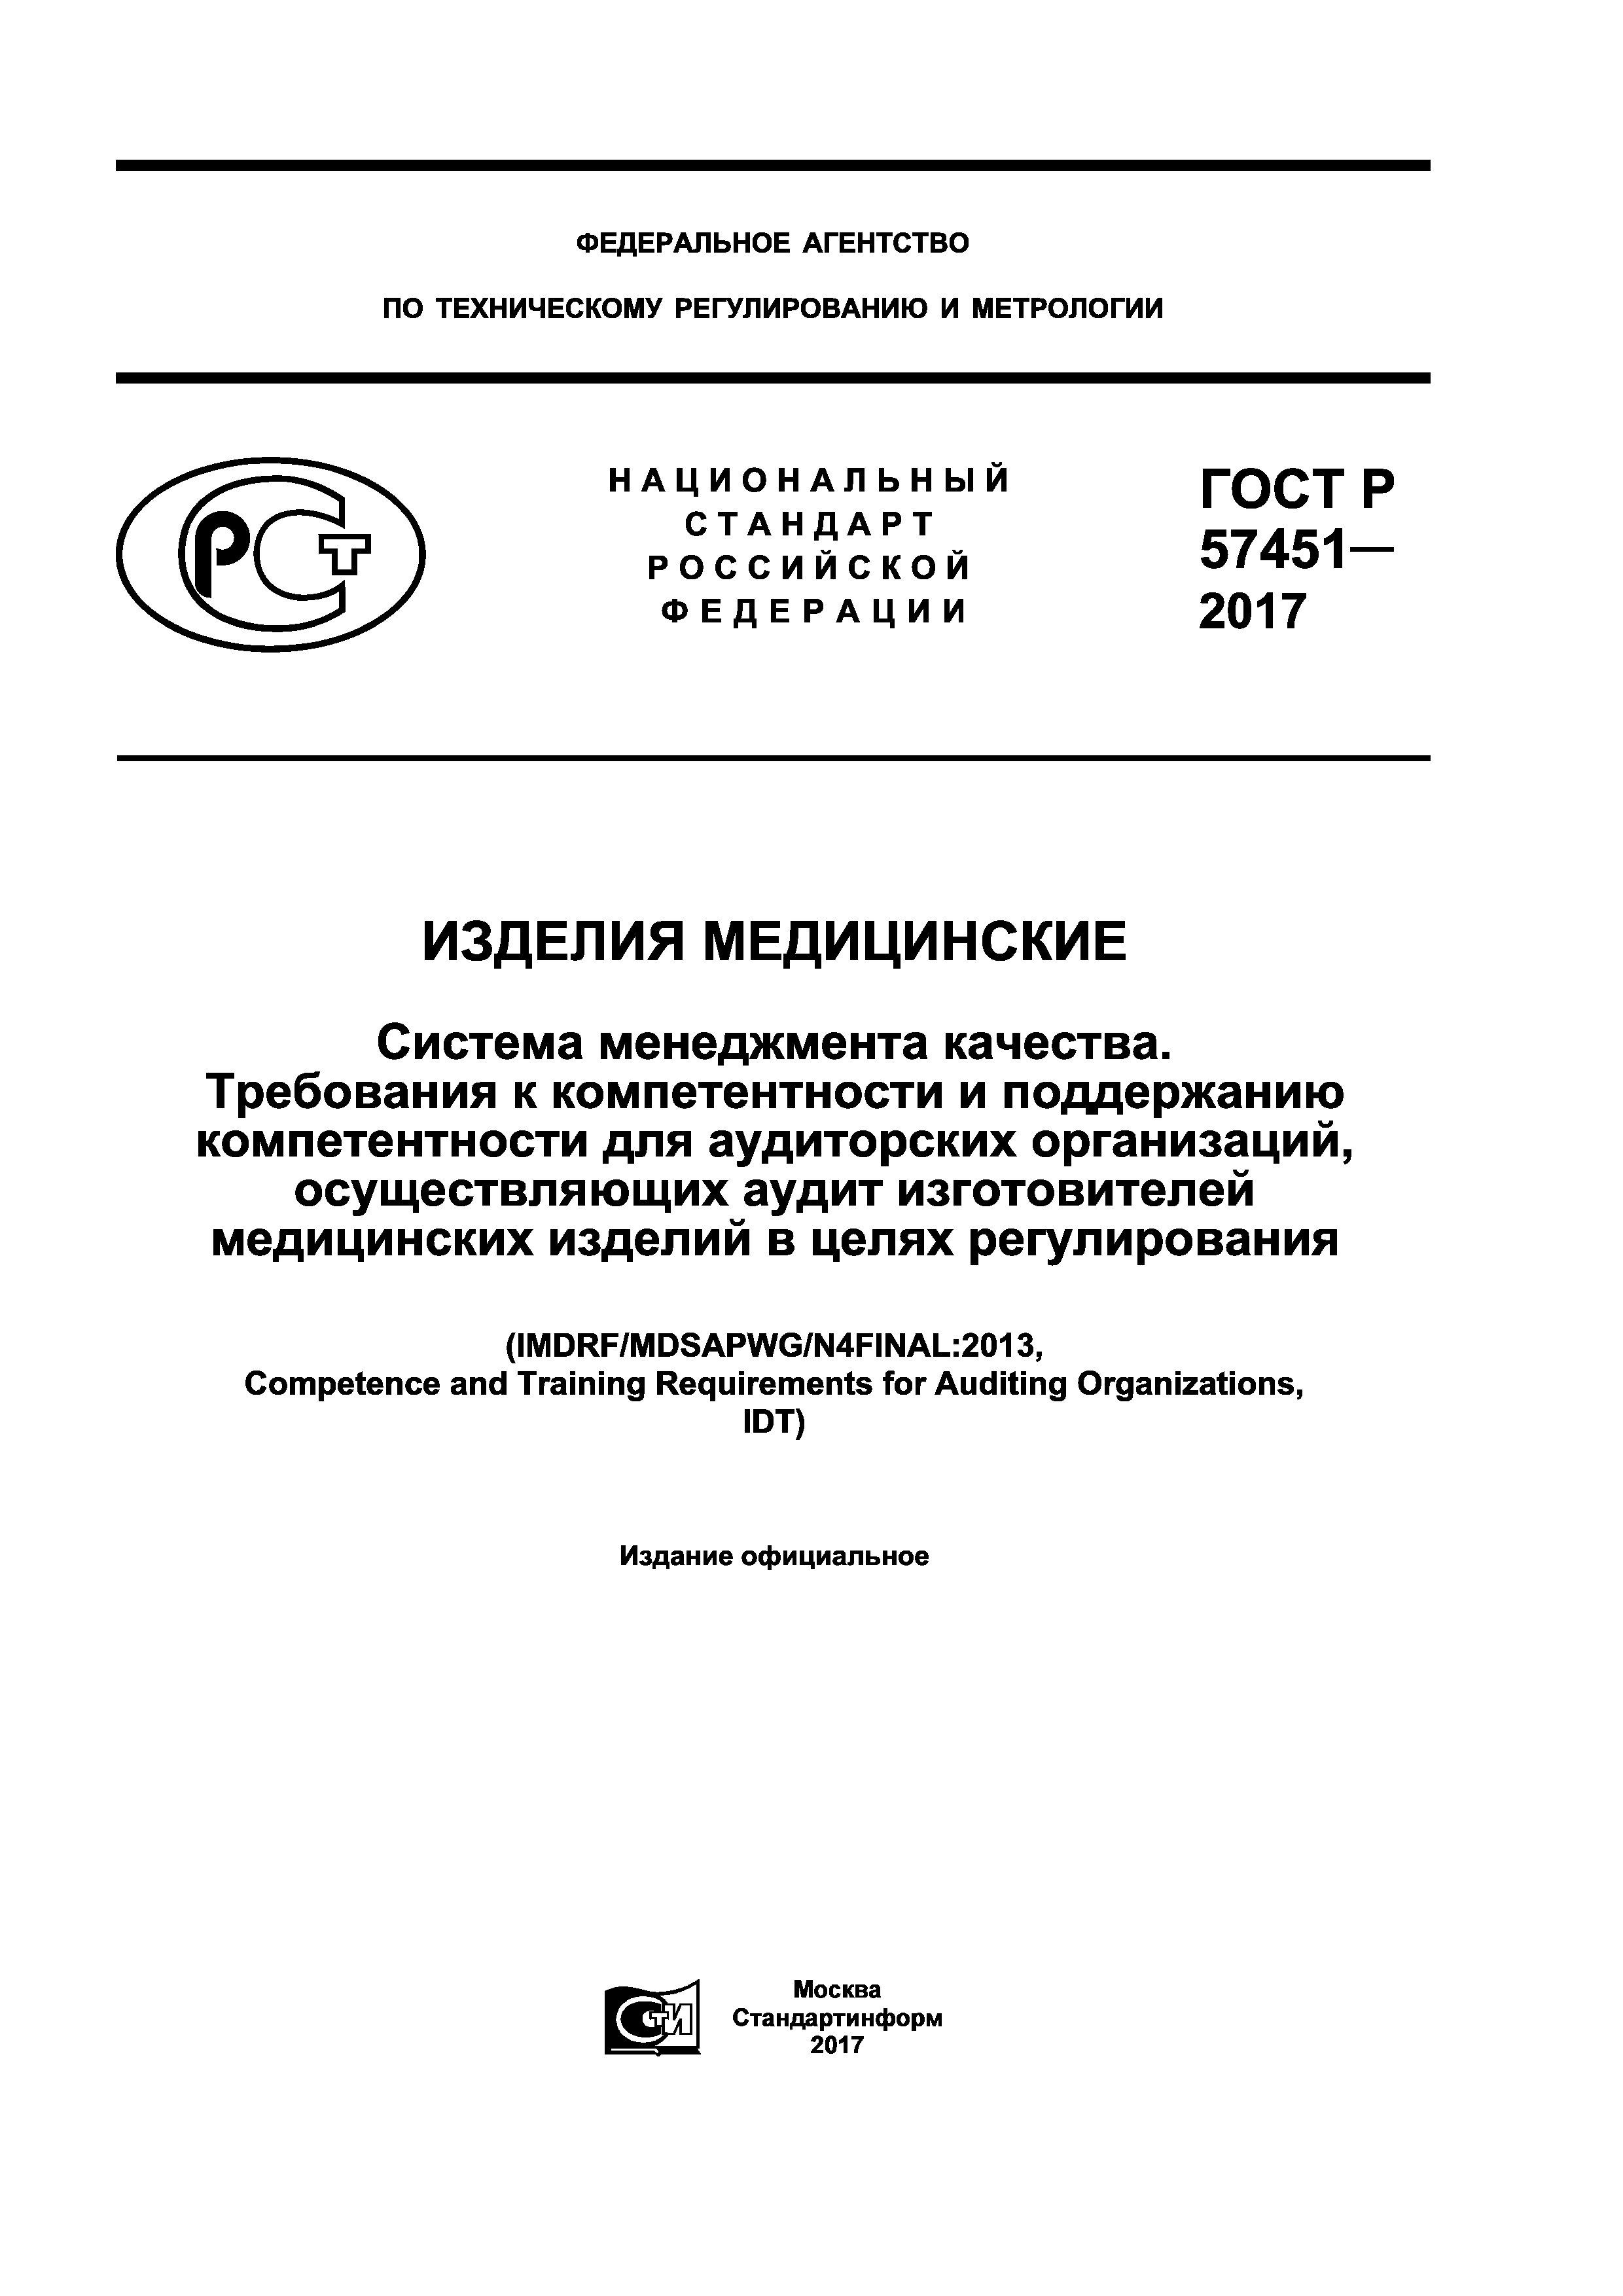 ГОСТ Р 57451-2017